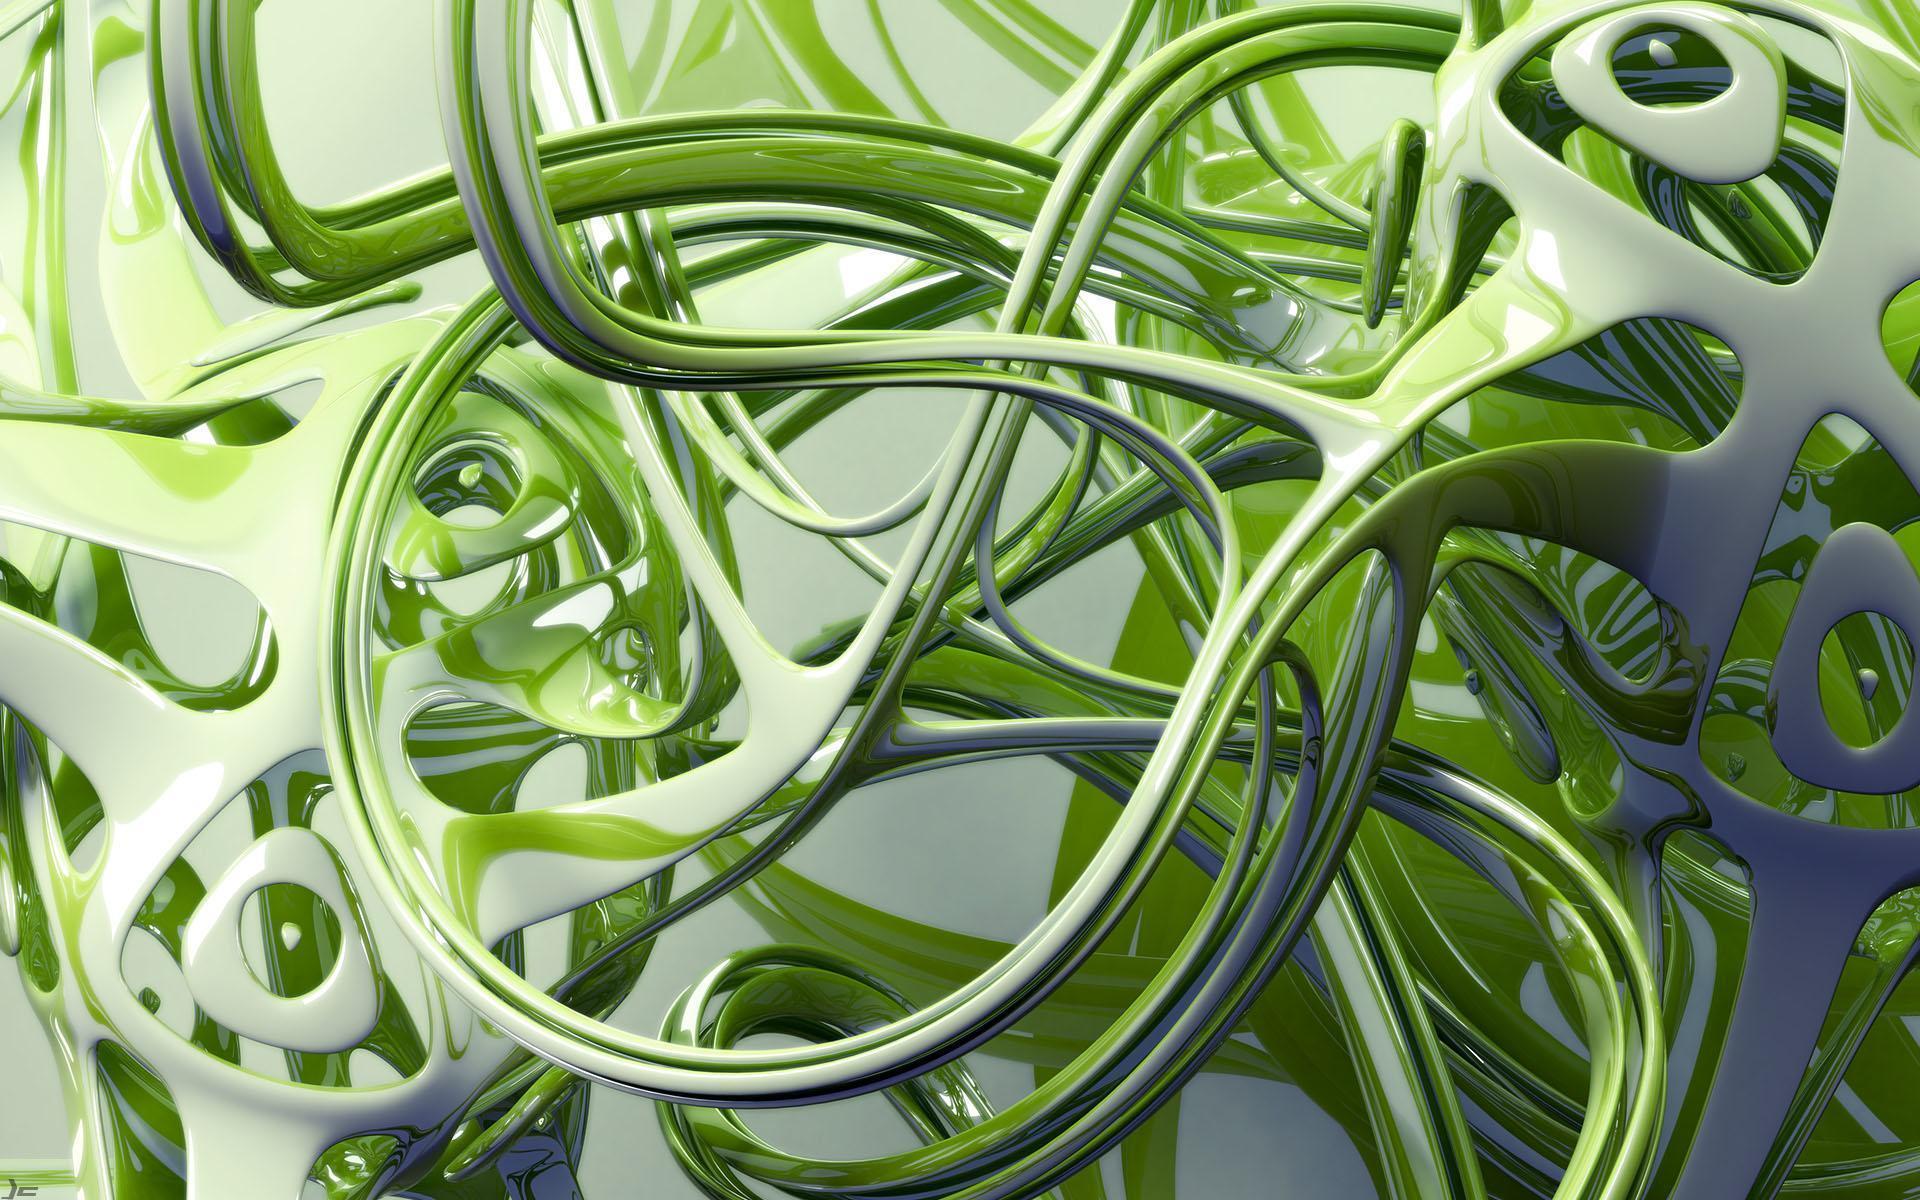 The Green Slime 3D Graphic Art Wallpaper